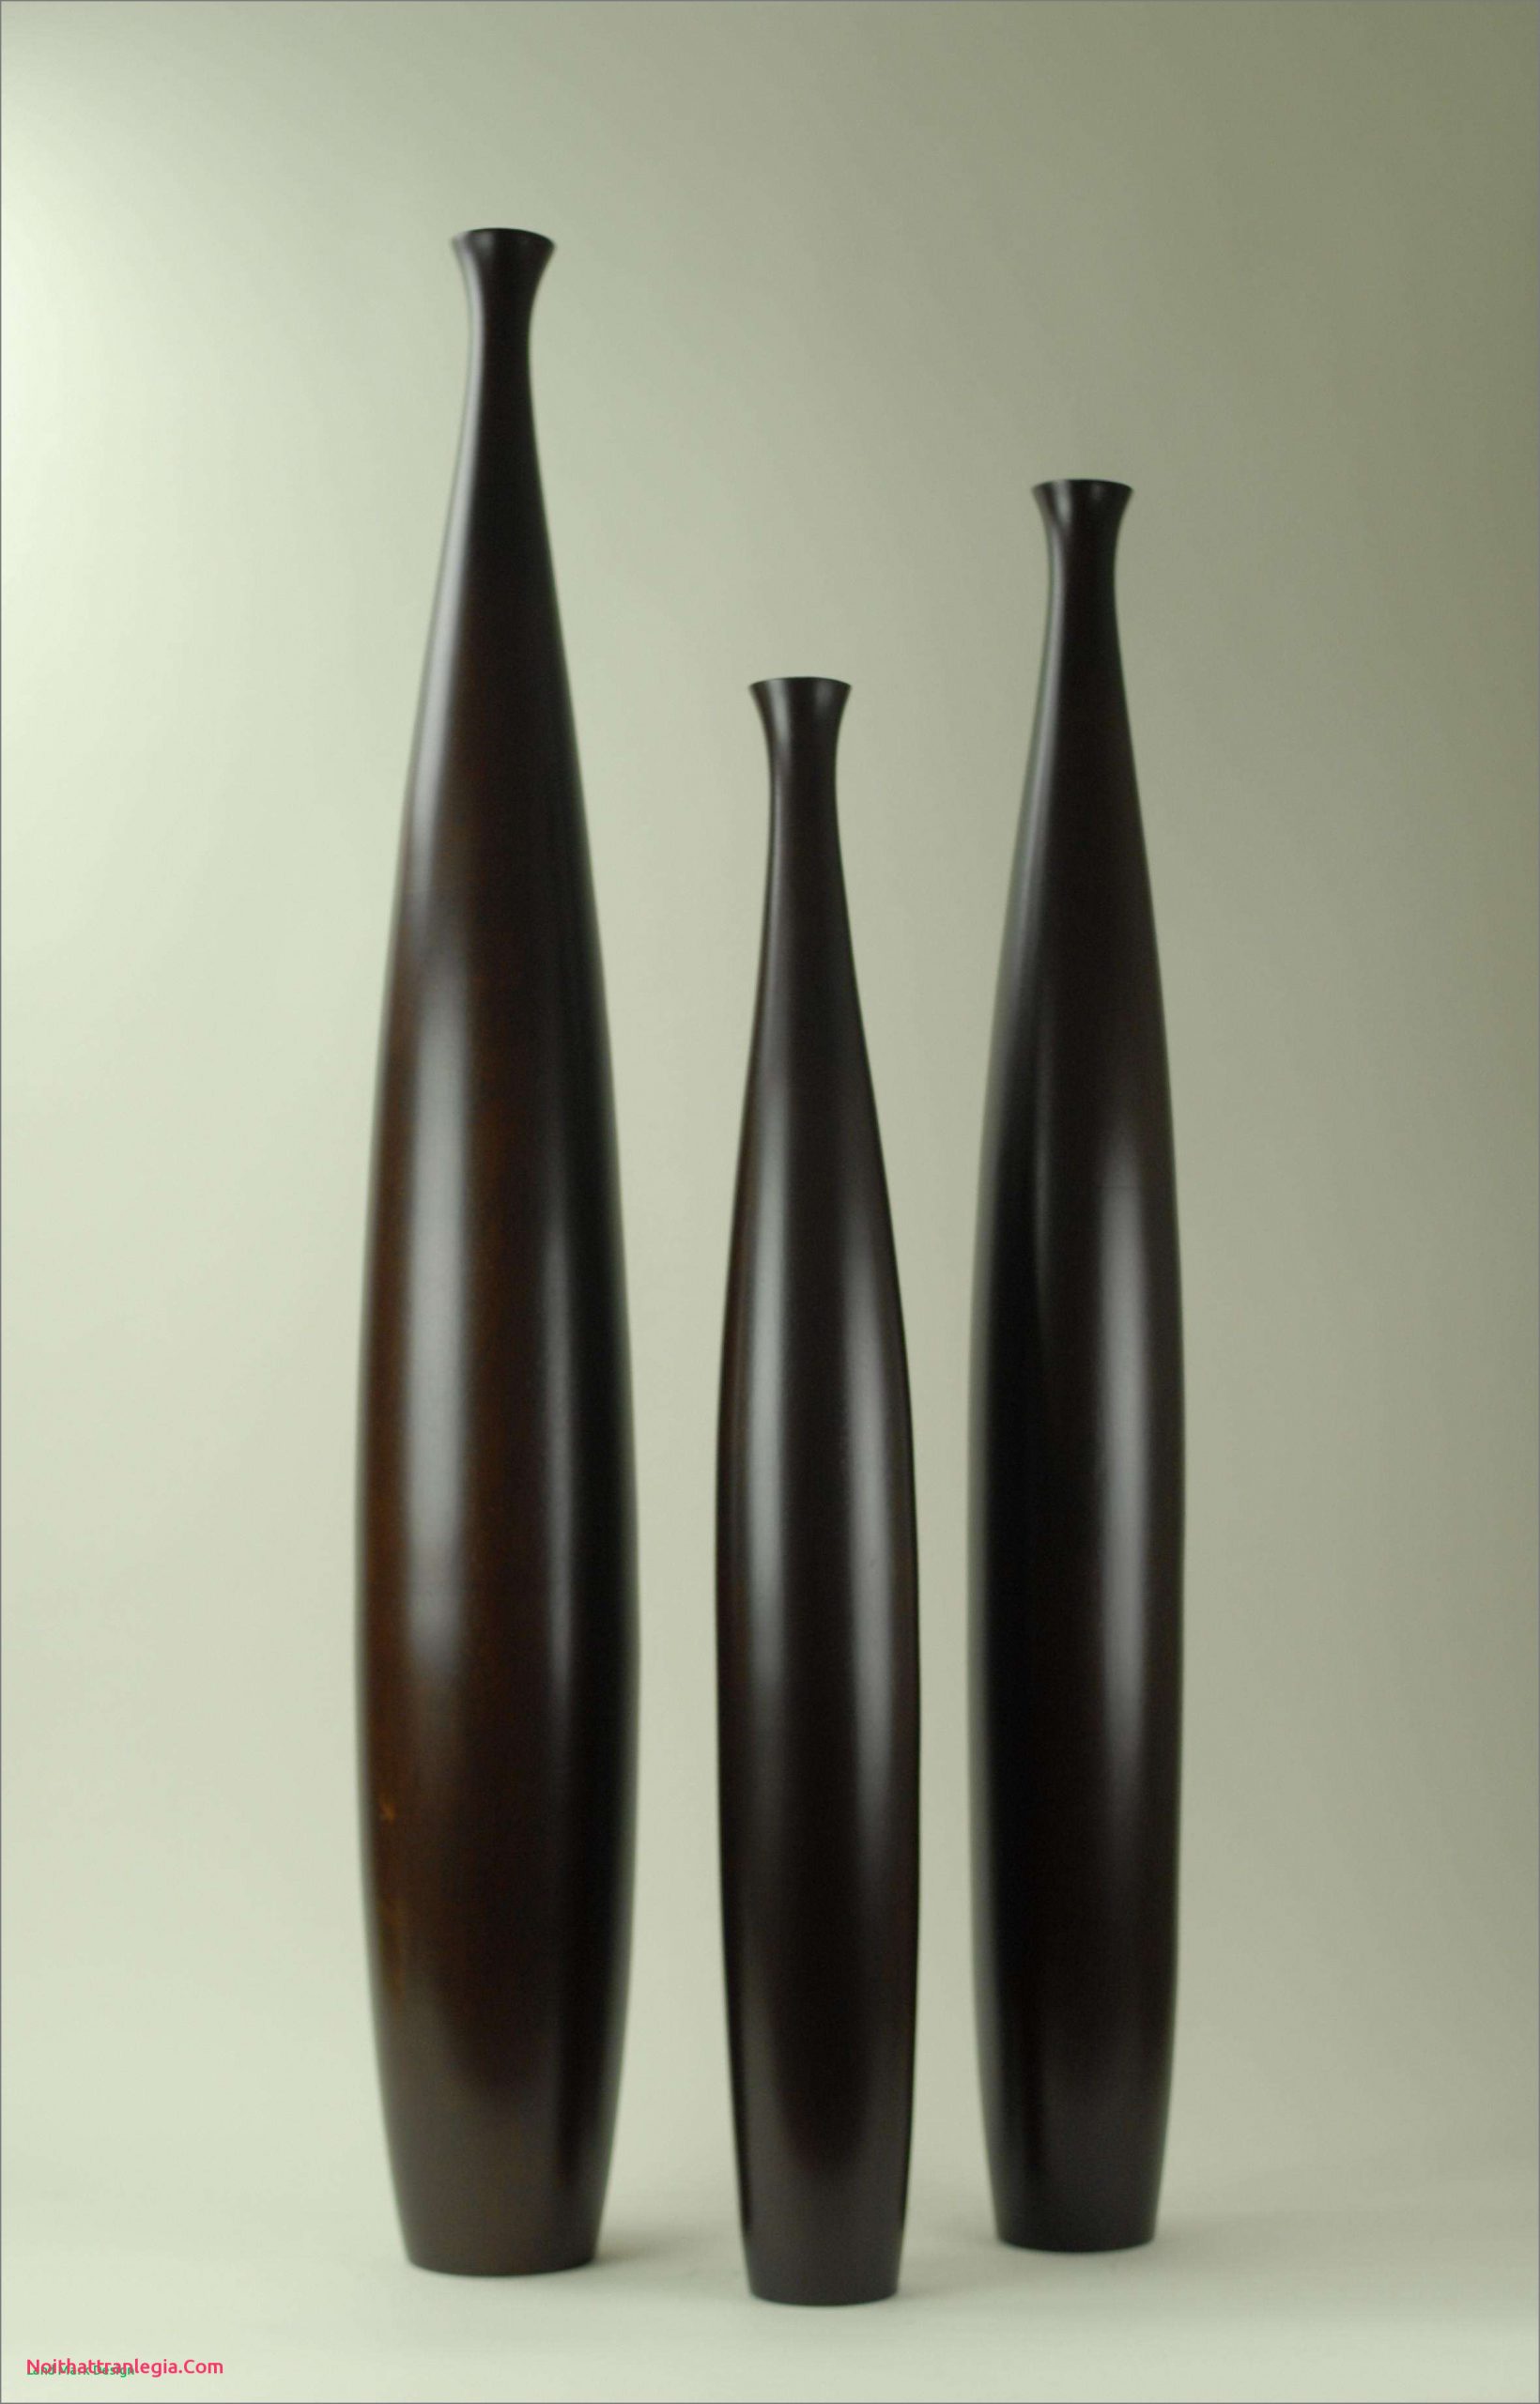 11 Ideal Huge Glass Floor Vase Decorative Vase Ideas intended for dimensions 2359 X 3683